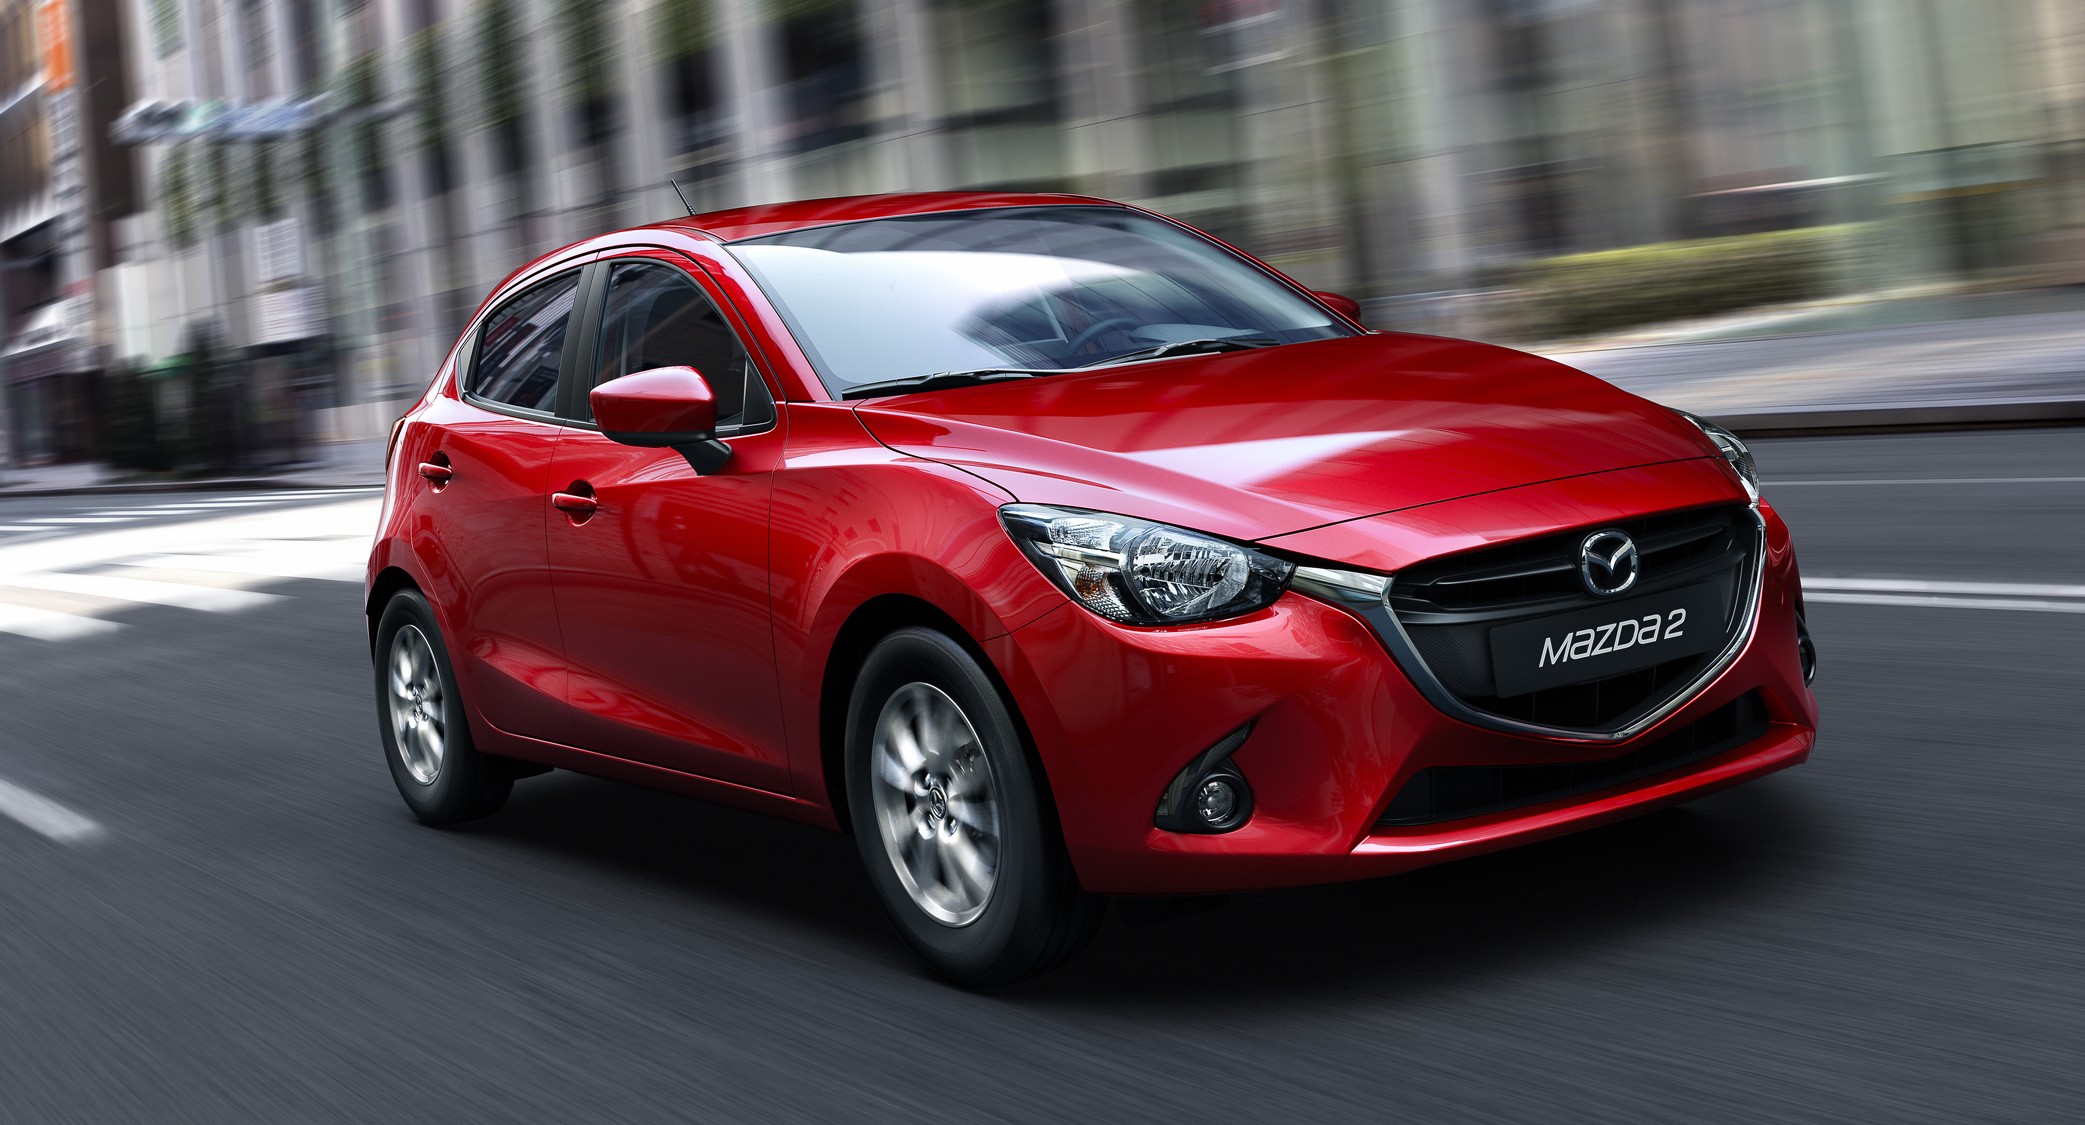 Mazda 2 awarded Car of The Year 2014-2015 in Japan